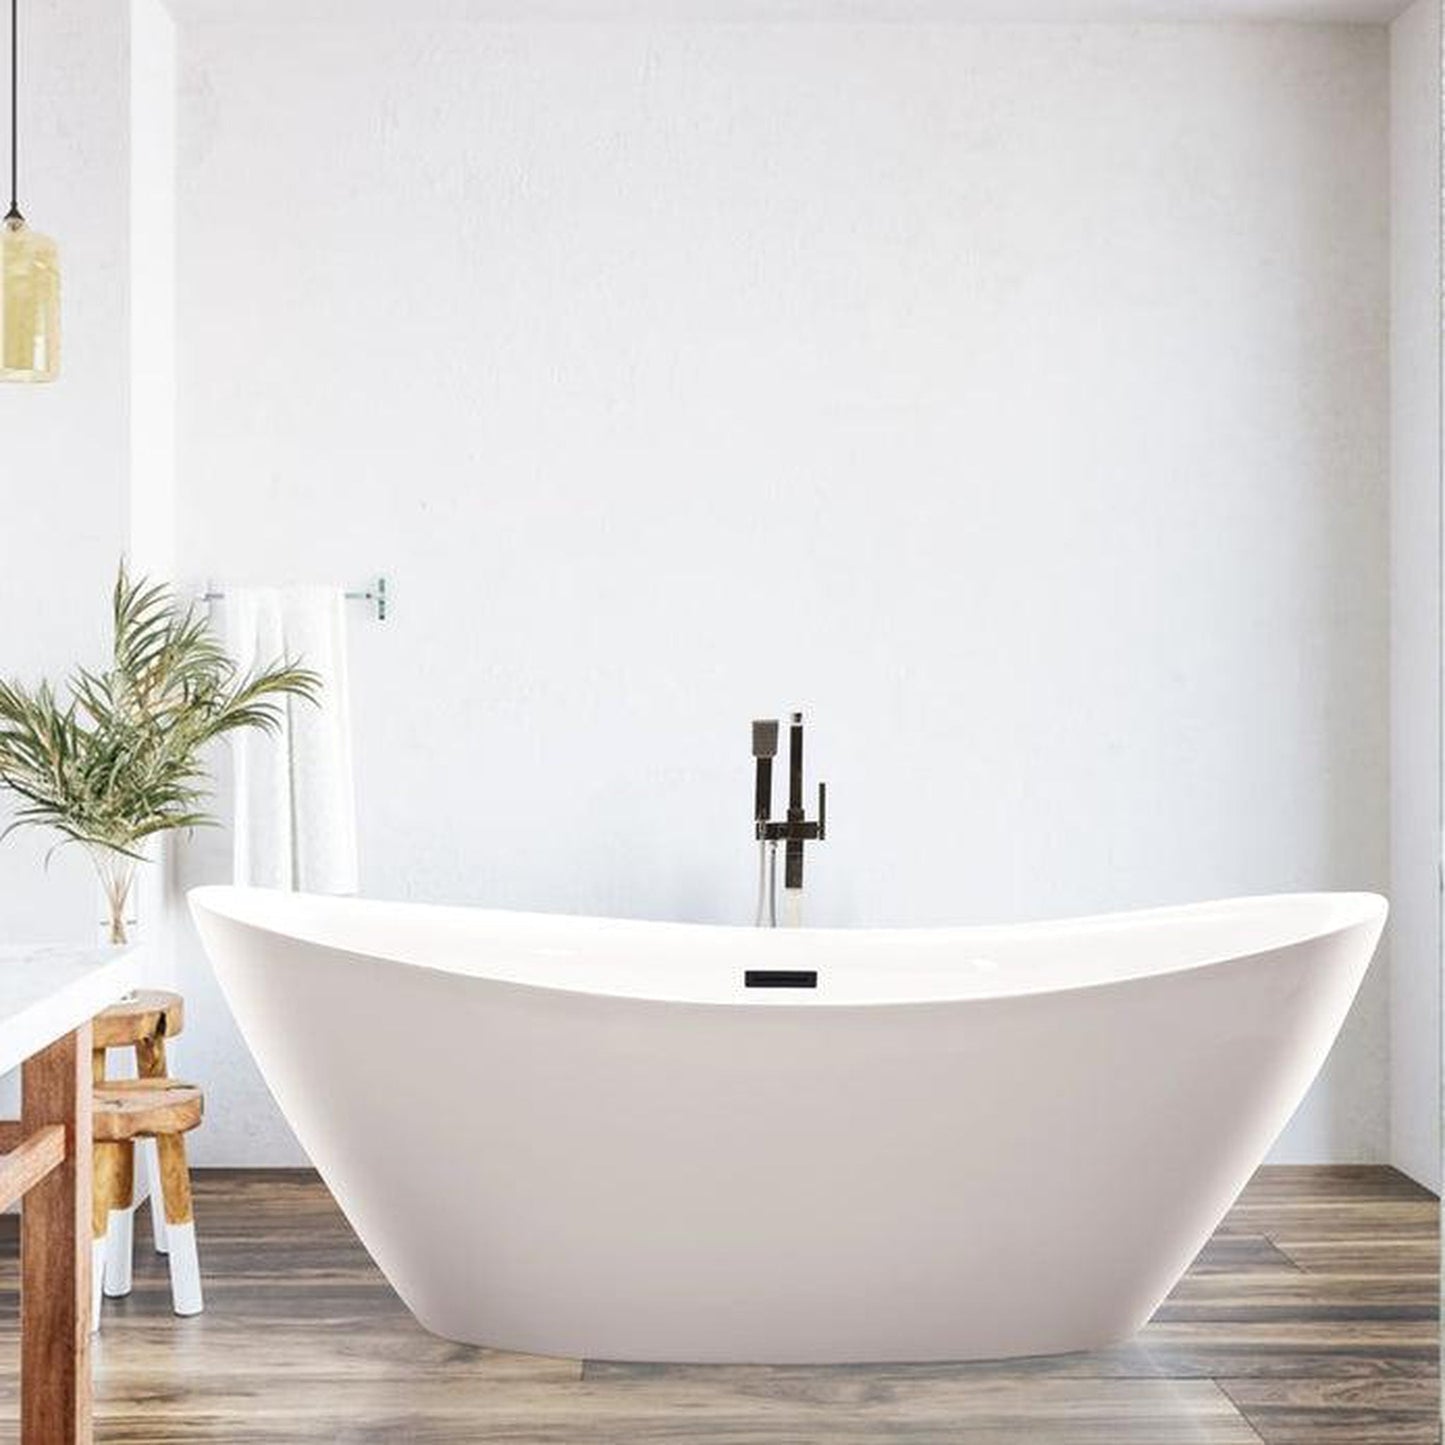 Vanity Art 71" W x 26" H White Acrylic Non-Slip Oval Freestanding Bathtub With Matte Black Pop-up Drain, Overflow and Flexible Drain Hose